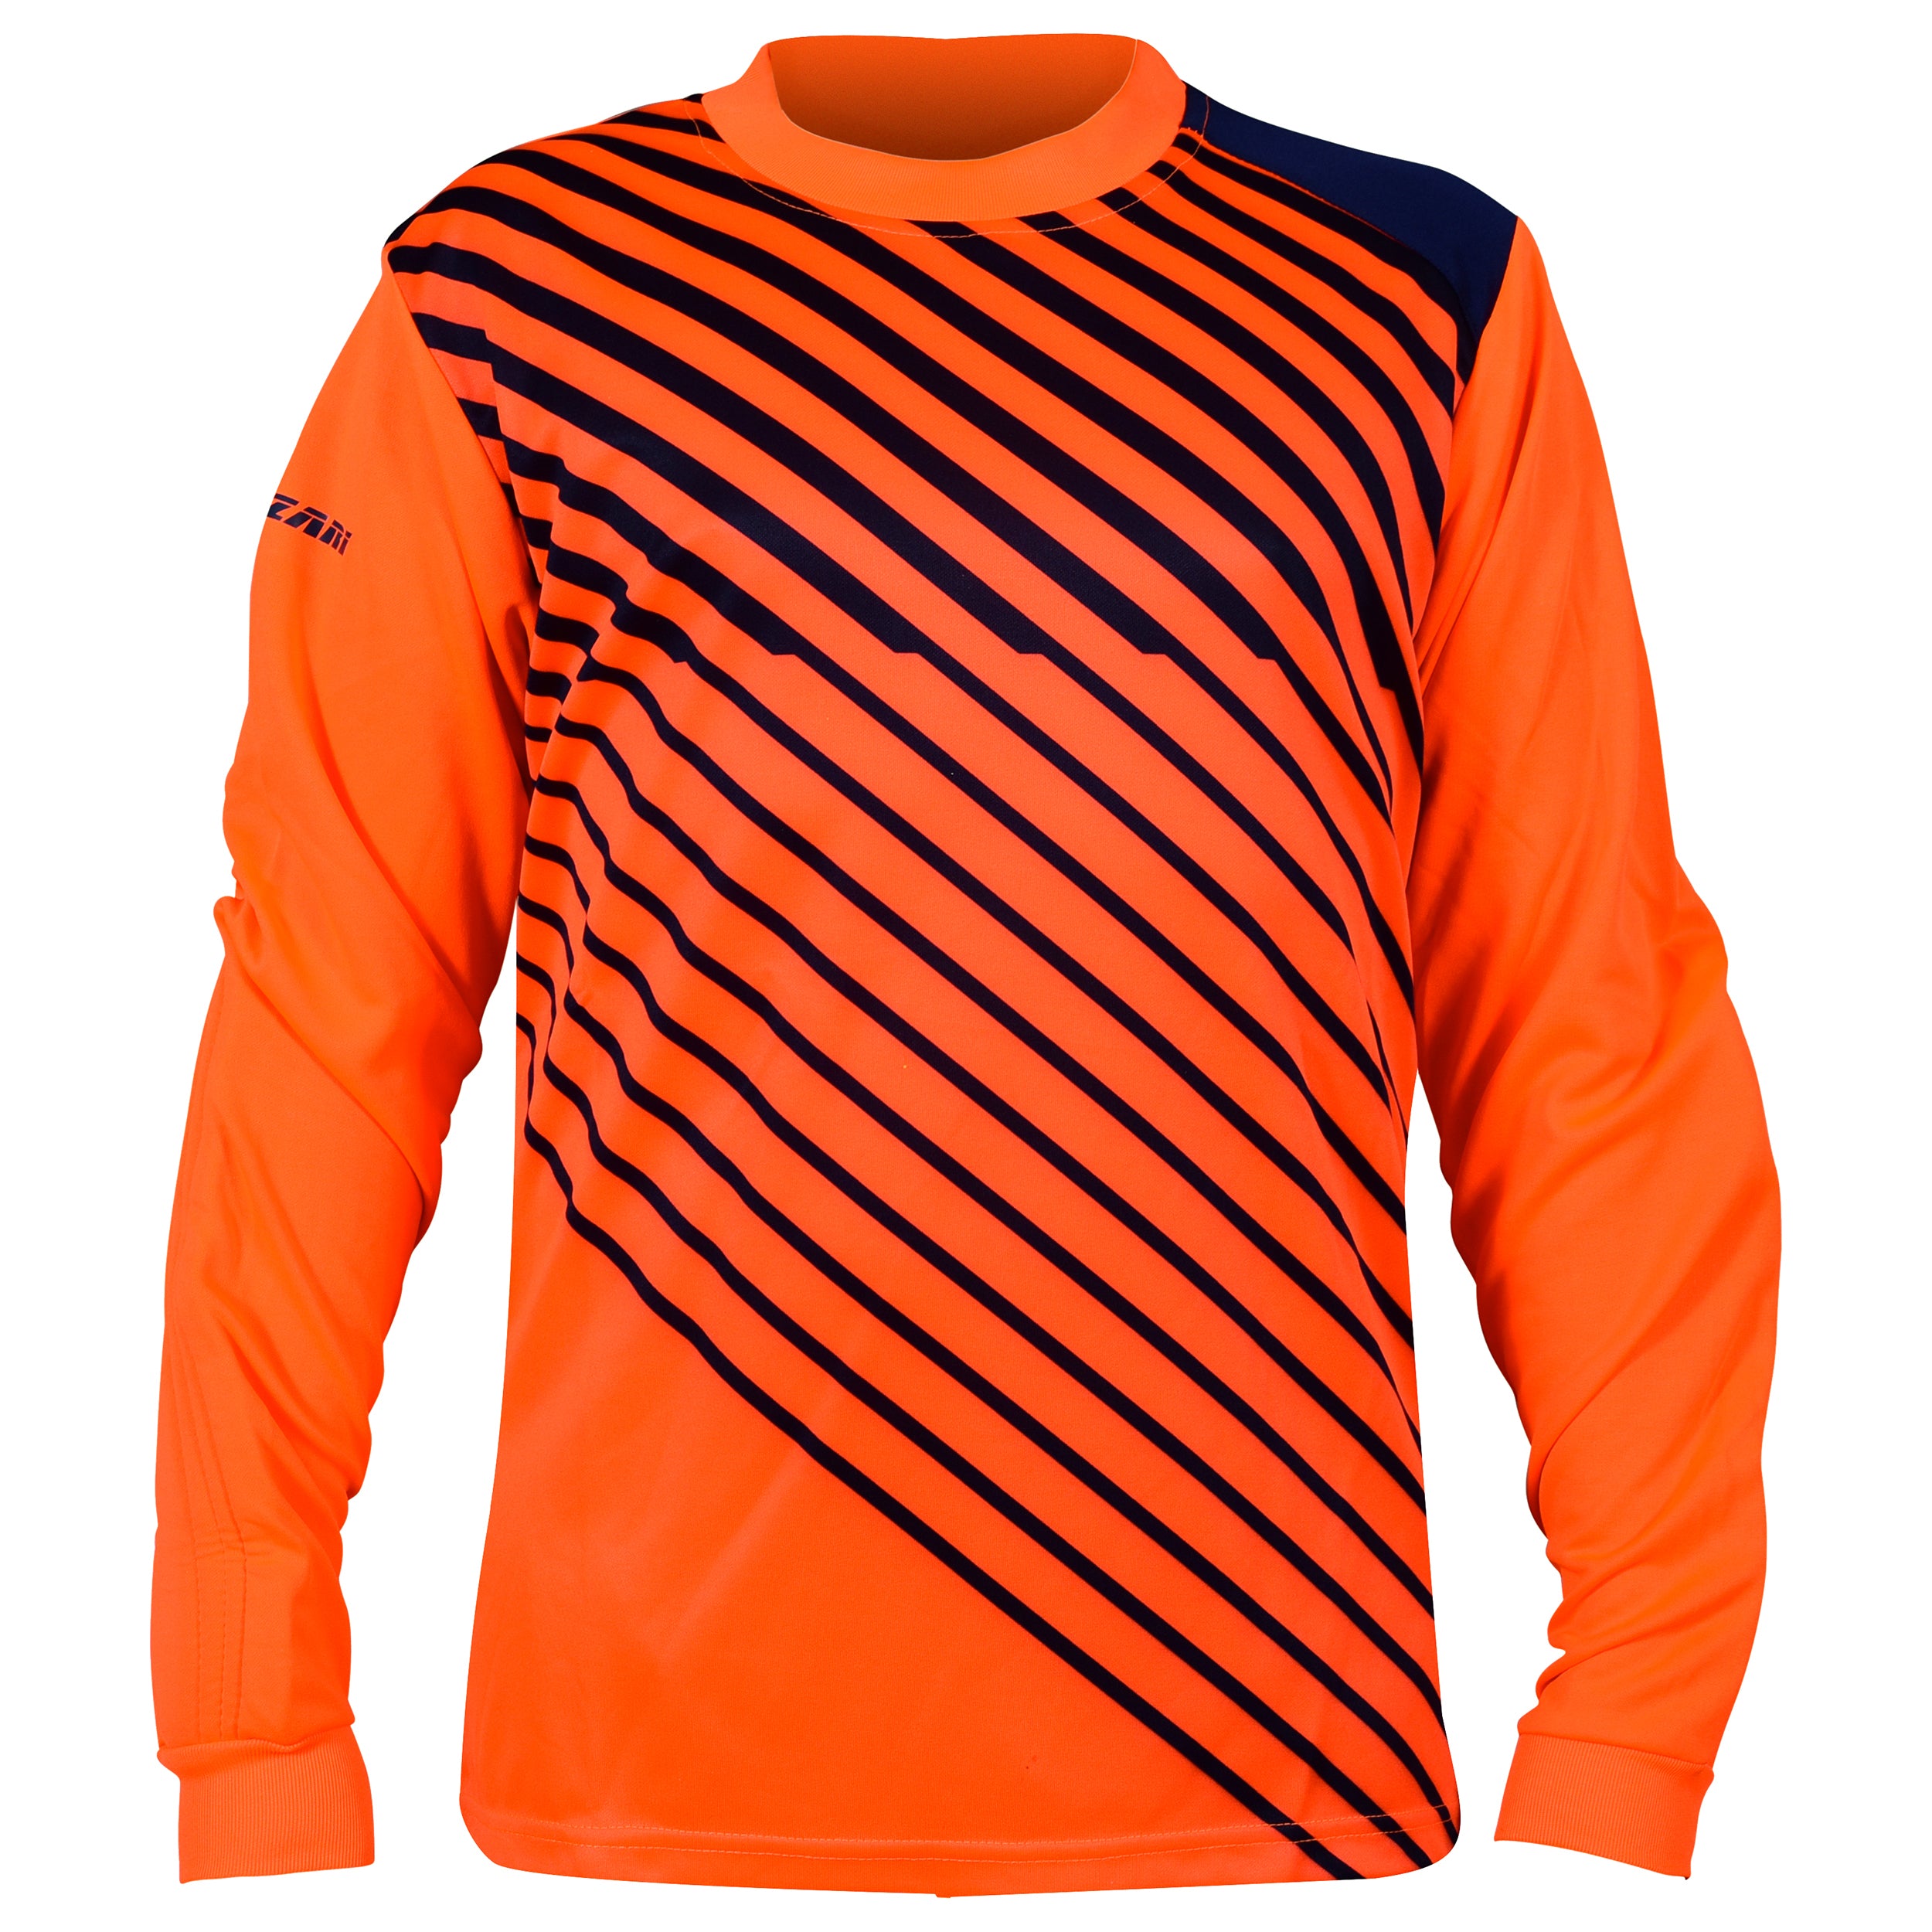 Vizari Arroyo Goalkeeper Jersey, Neon Orange/Navy, Adult Small